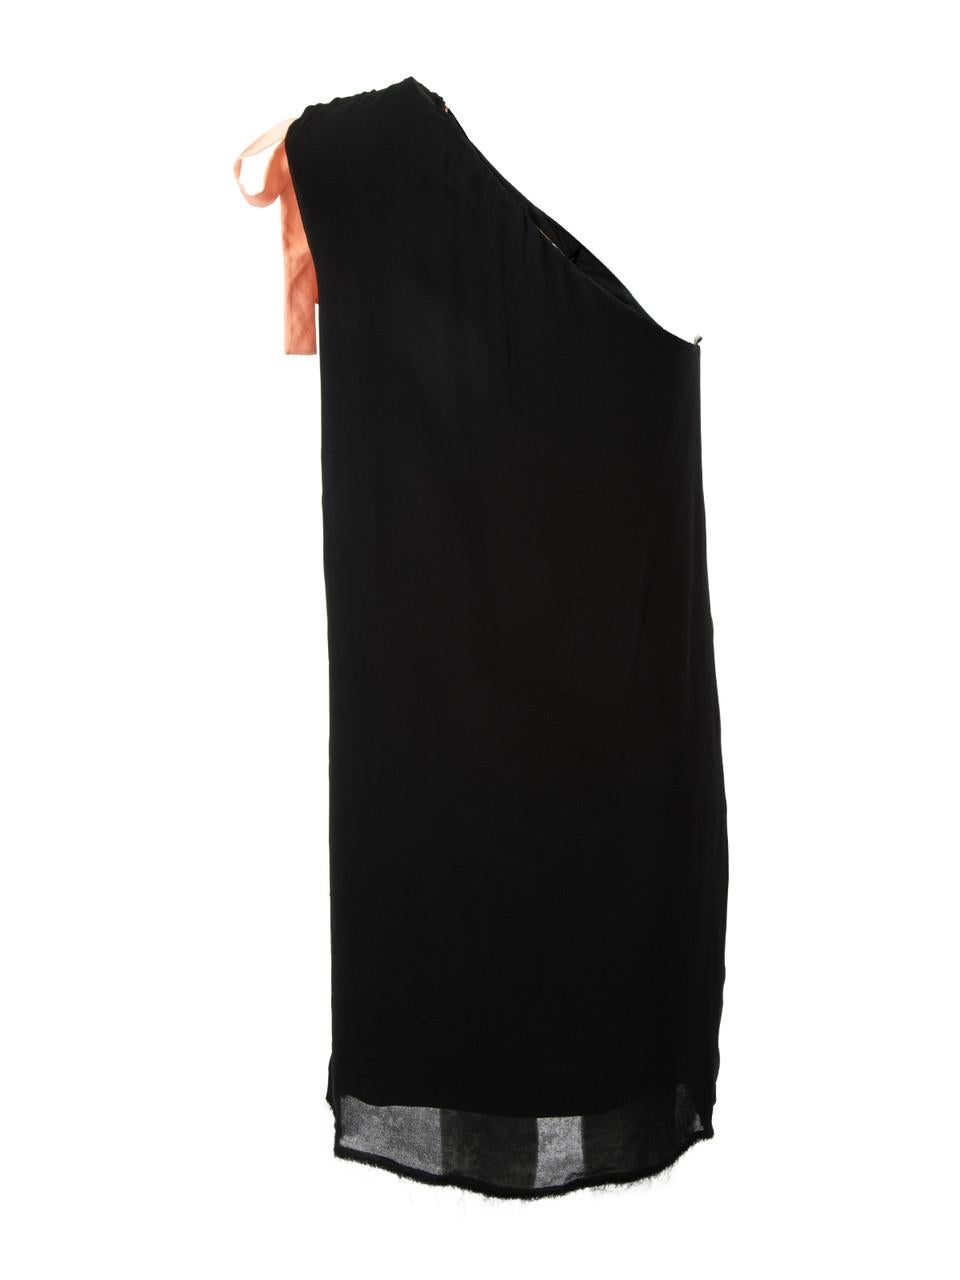 Women's Fendi Black One Shoulder Floral Embroidery Dress Size M For Sale